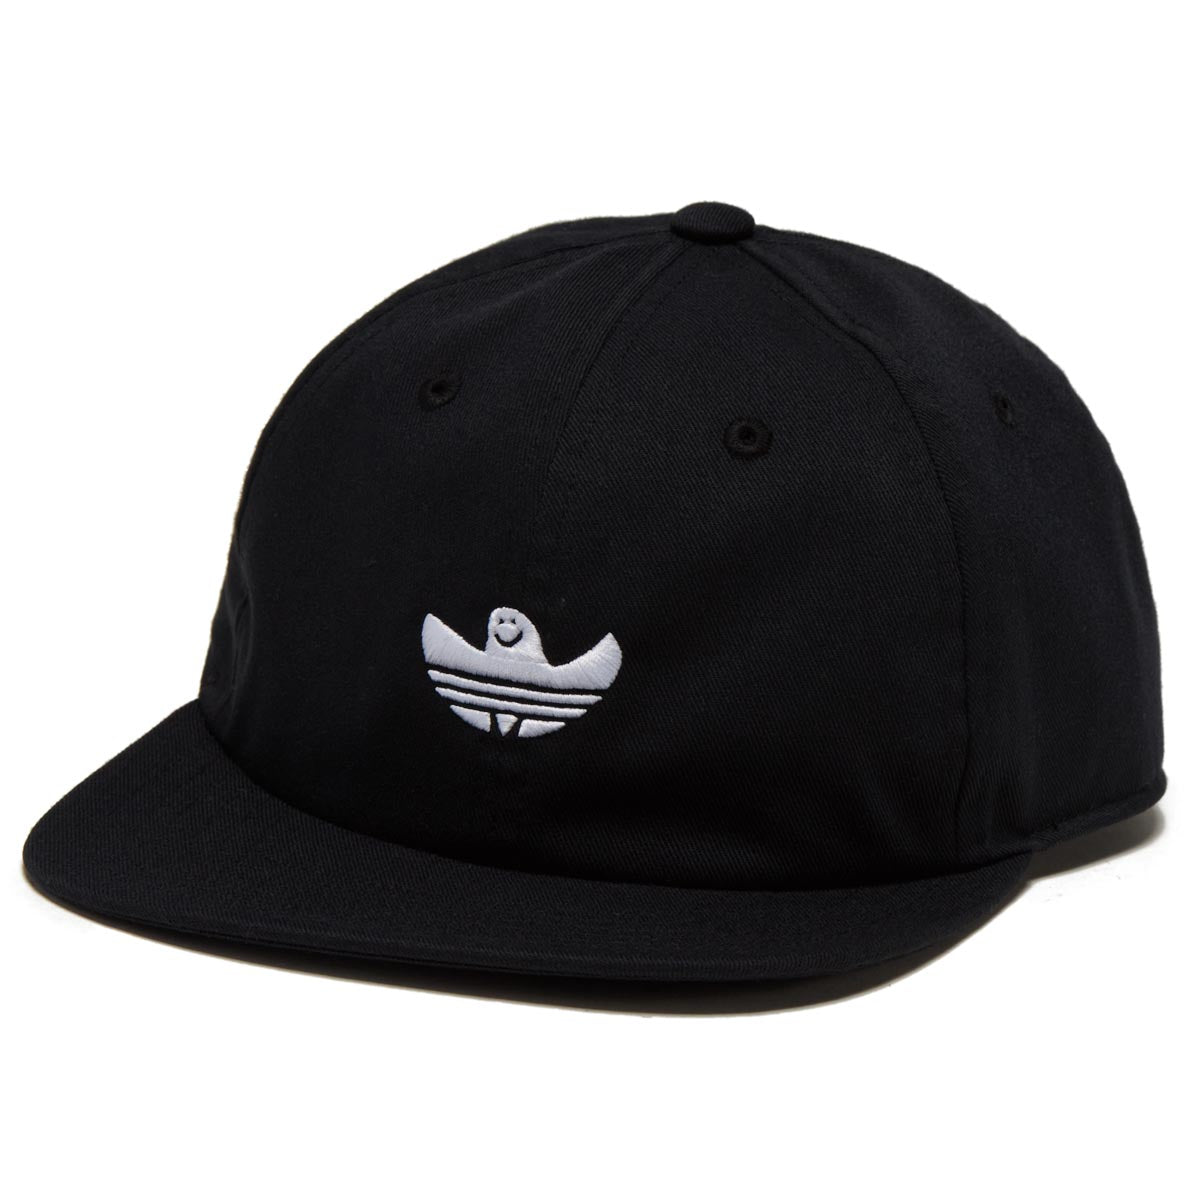 Adidas Shmoo Hat - Black image 1